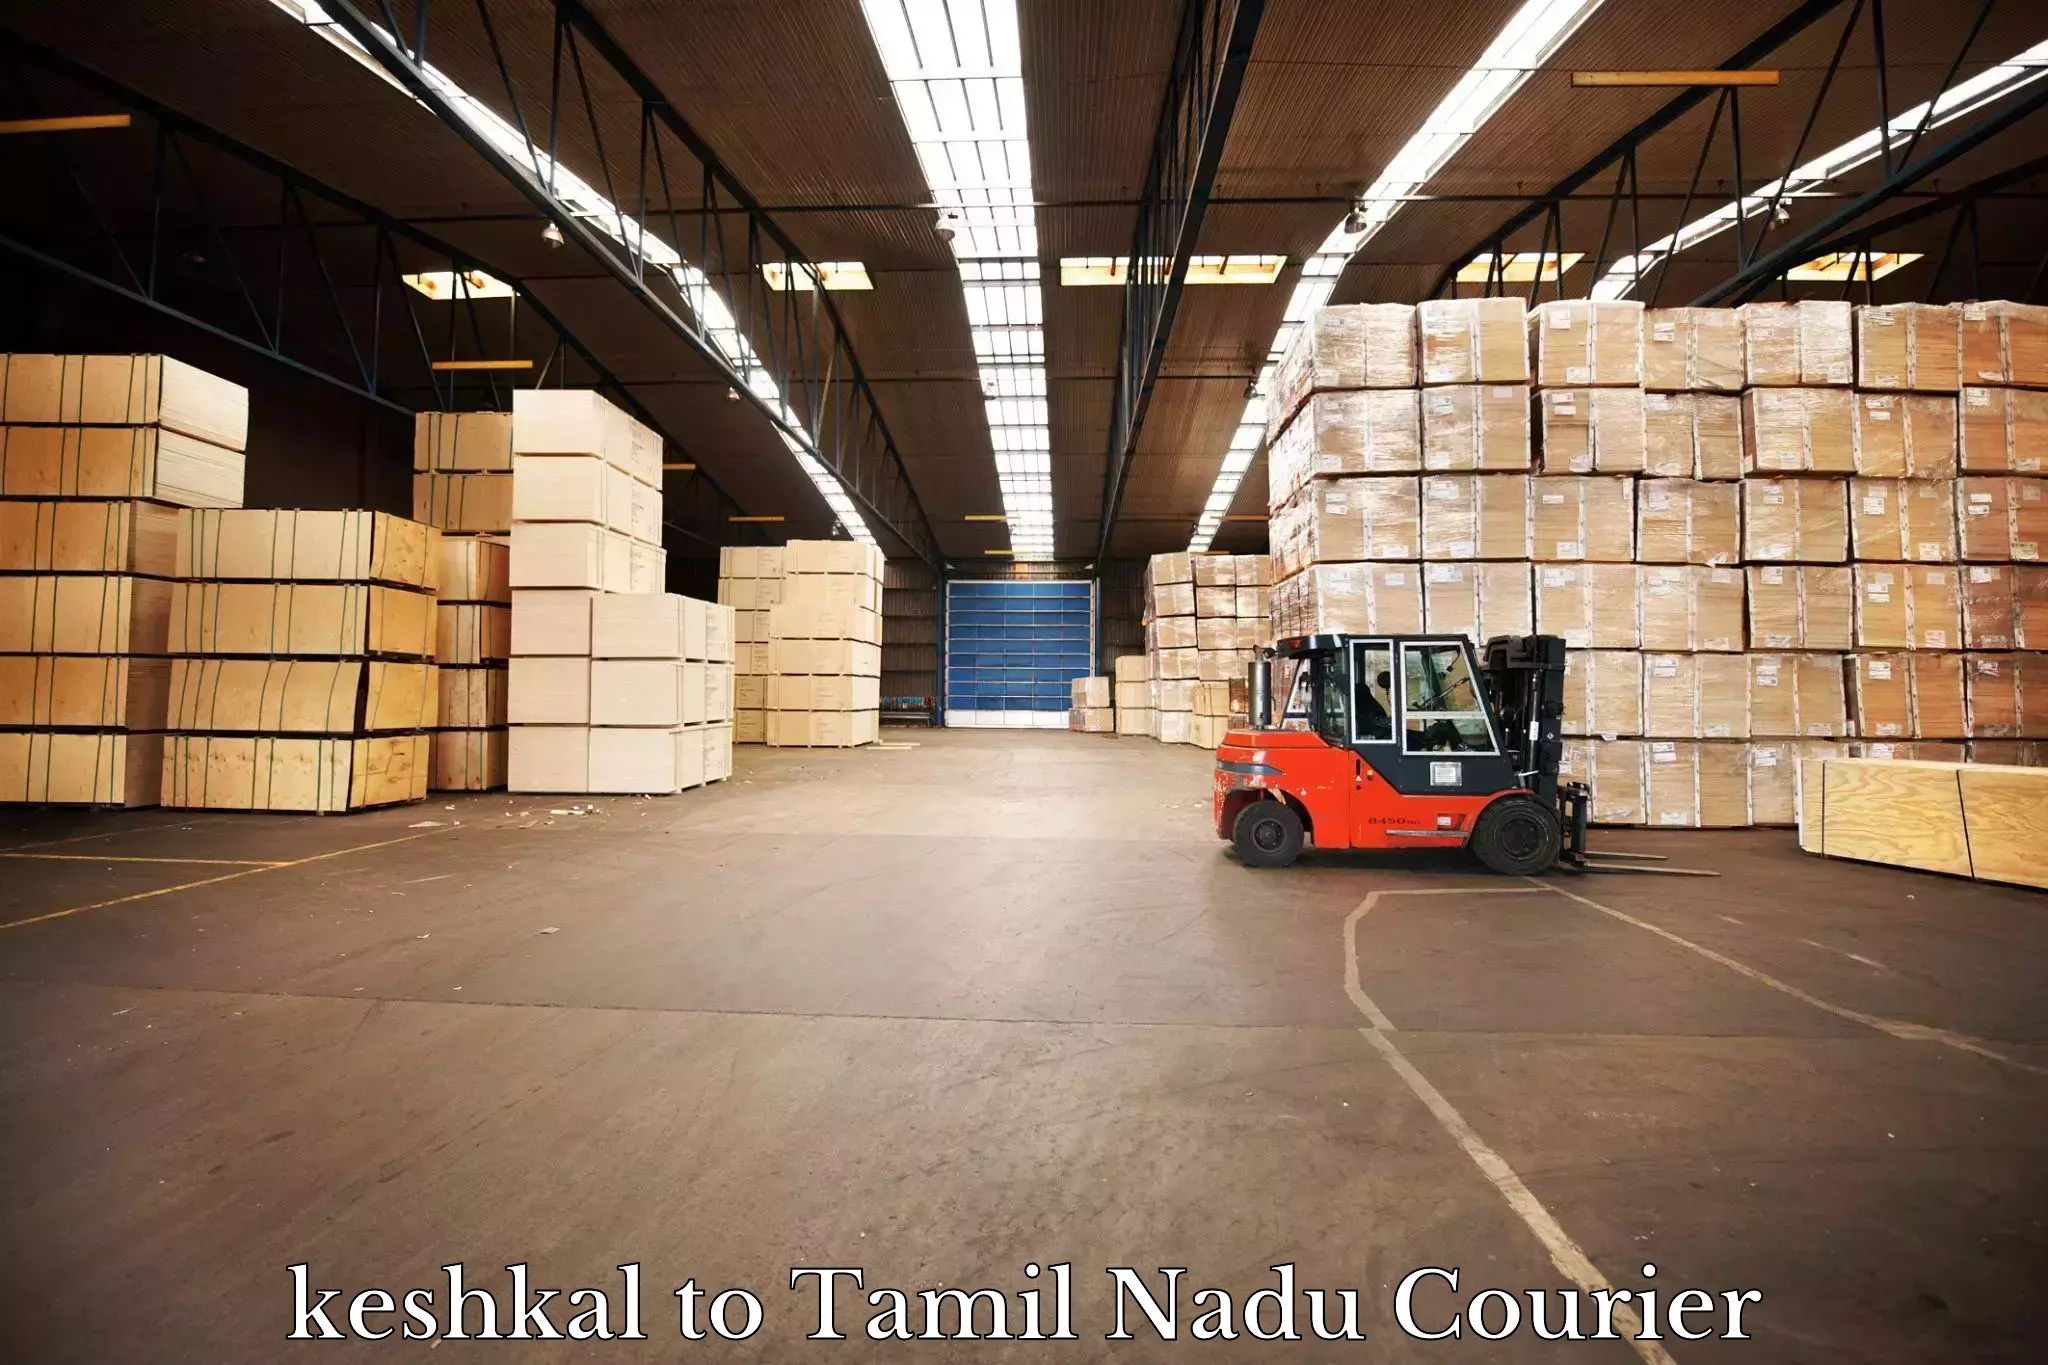 Courier insurance keshkal to Ennore Port Chennai